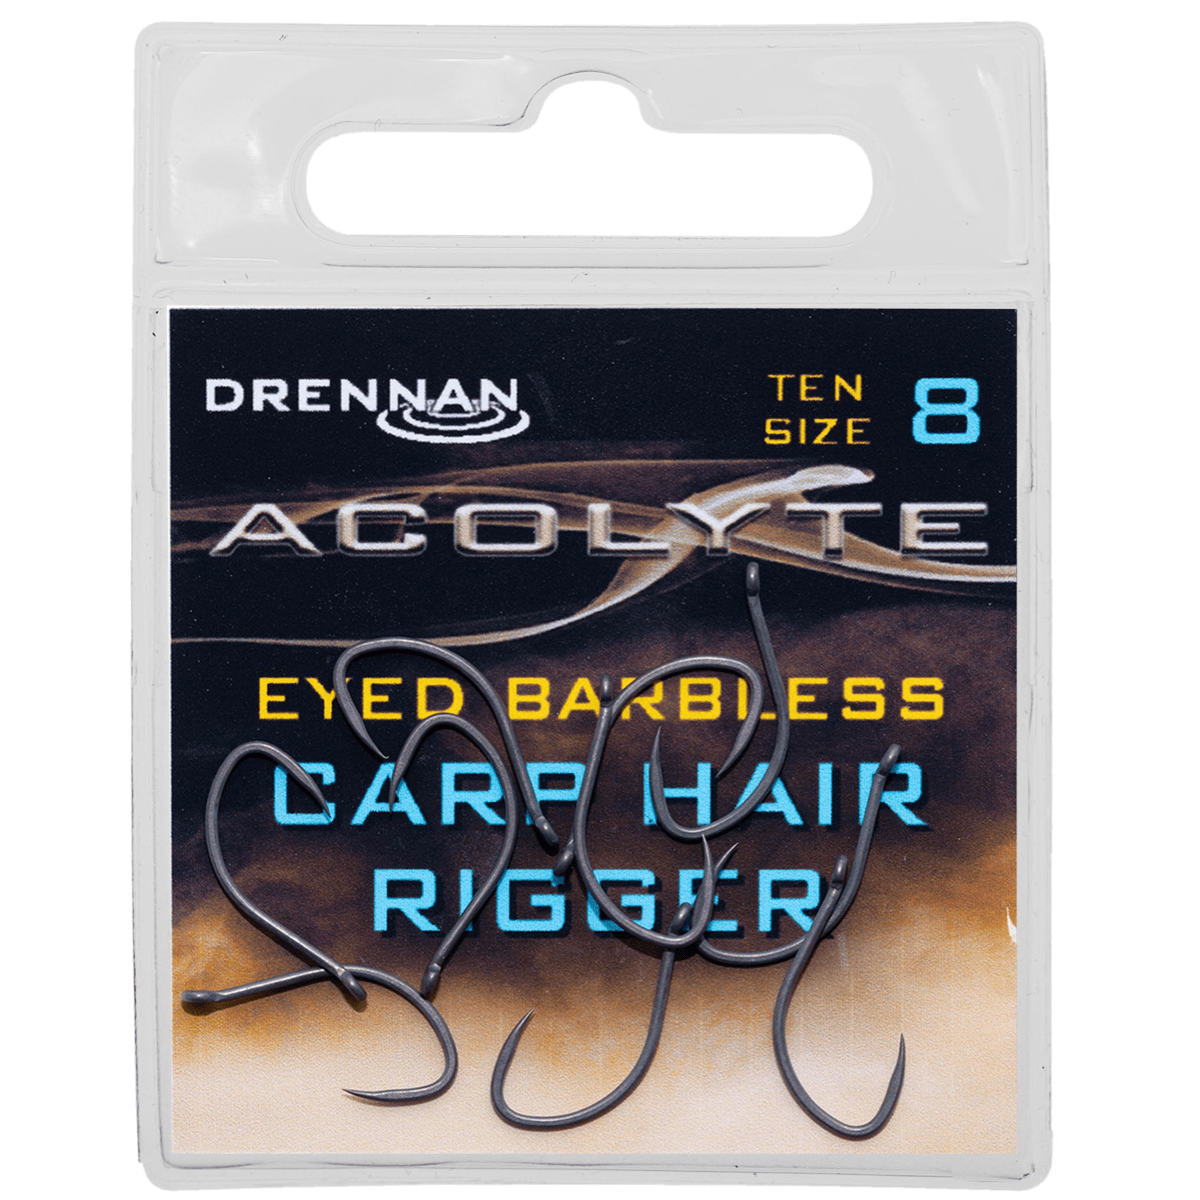 drennan acolyte carp hair riggers barbless 